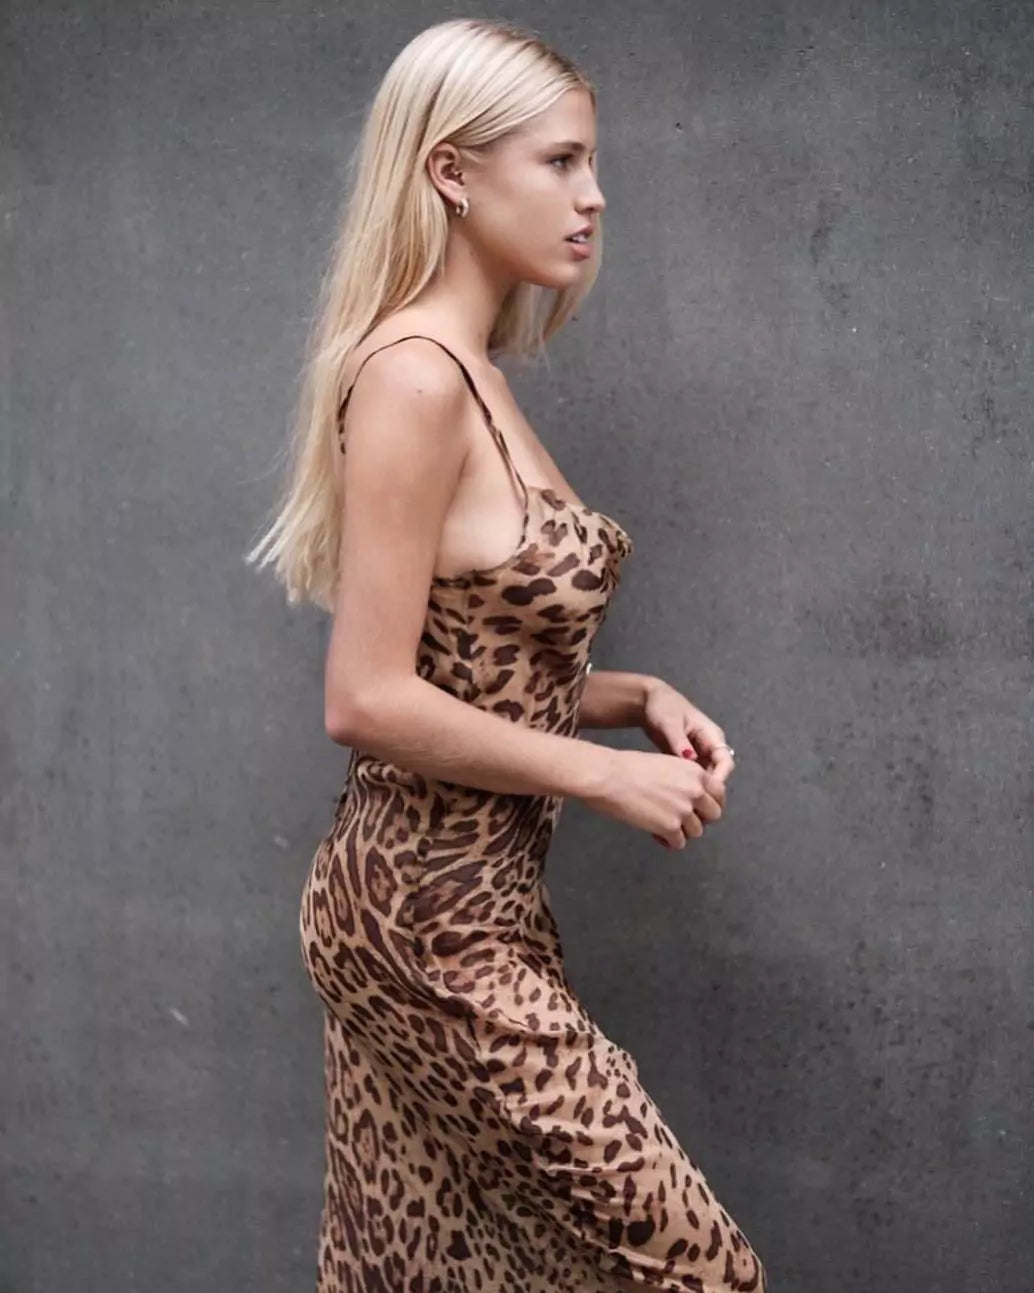 A blonde woman in a leopard print dress.